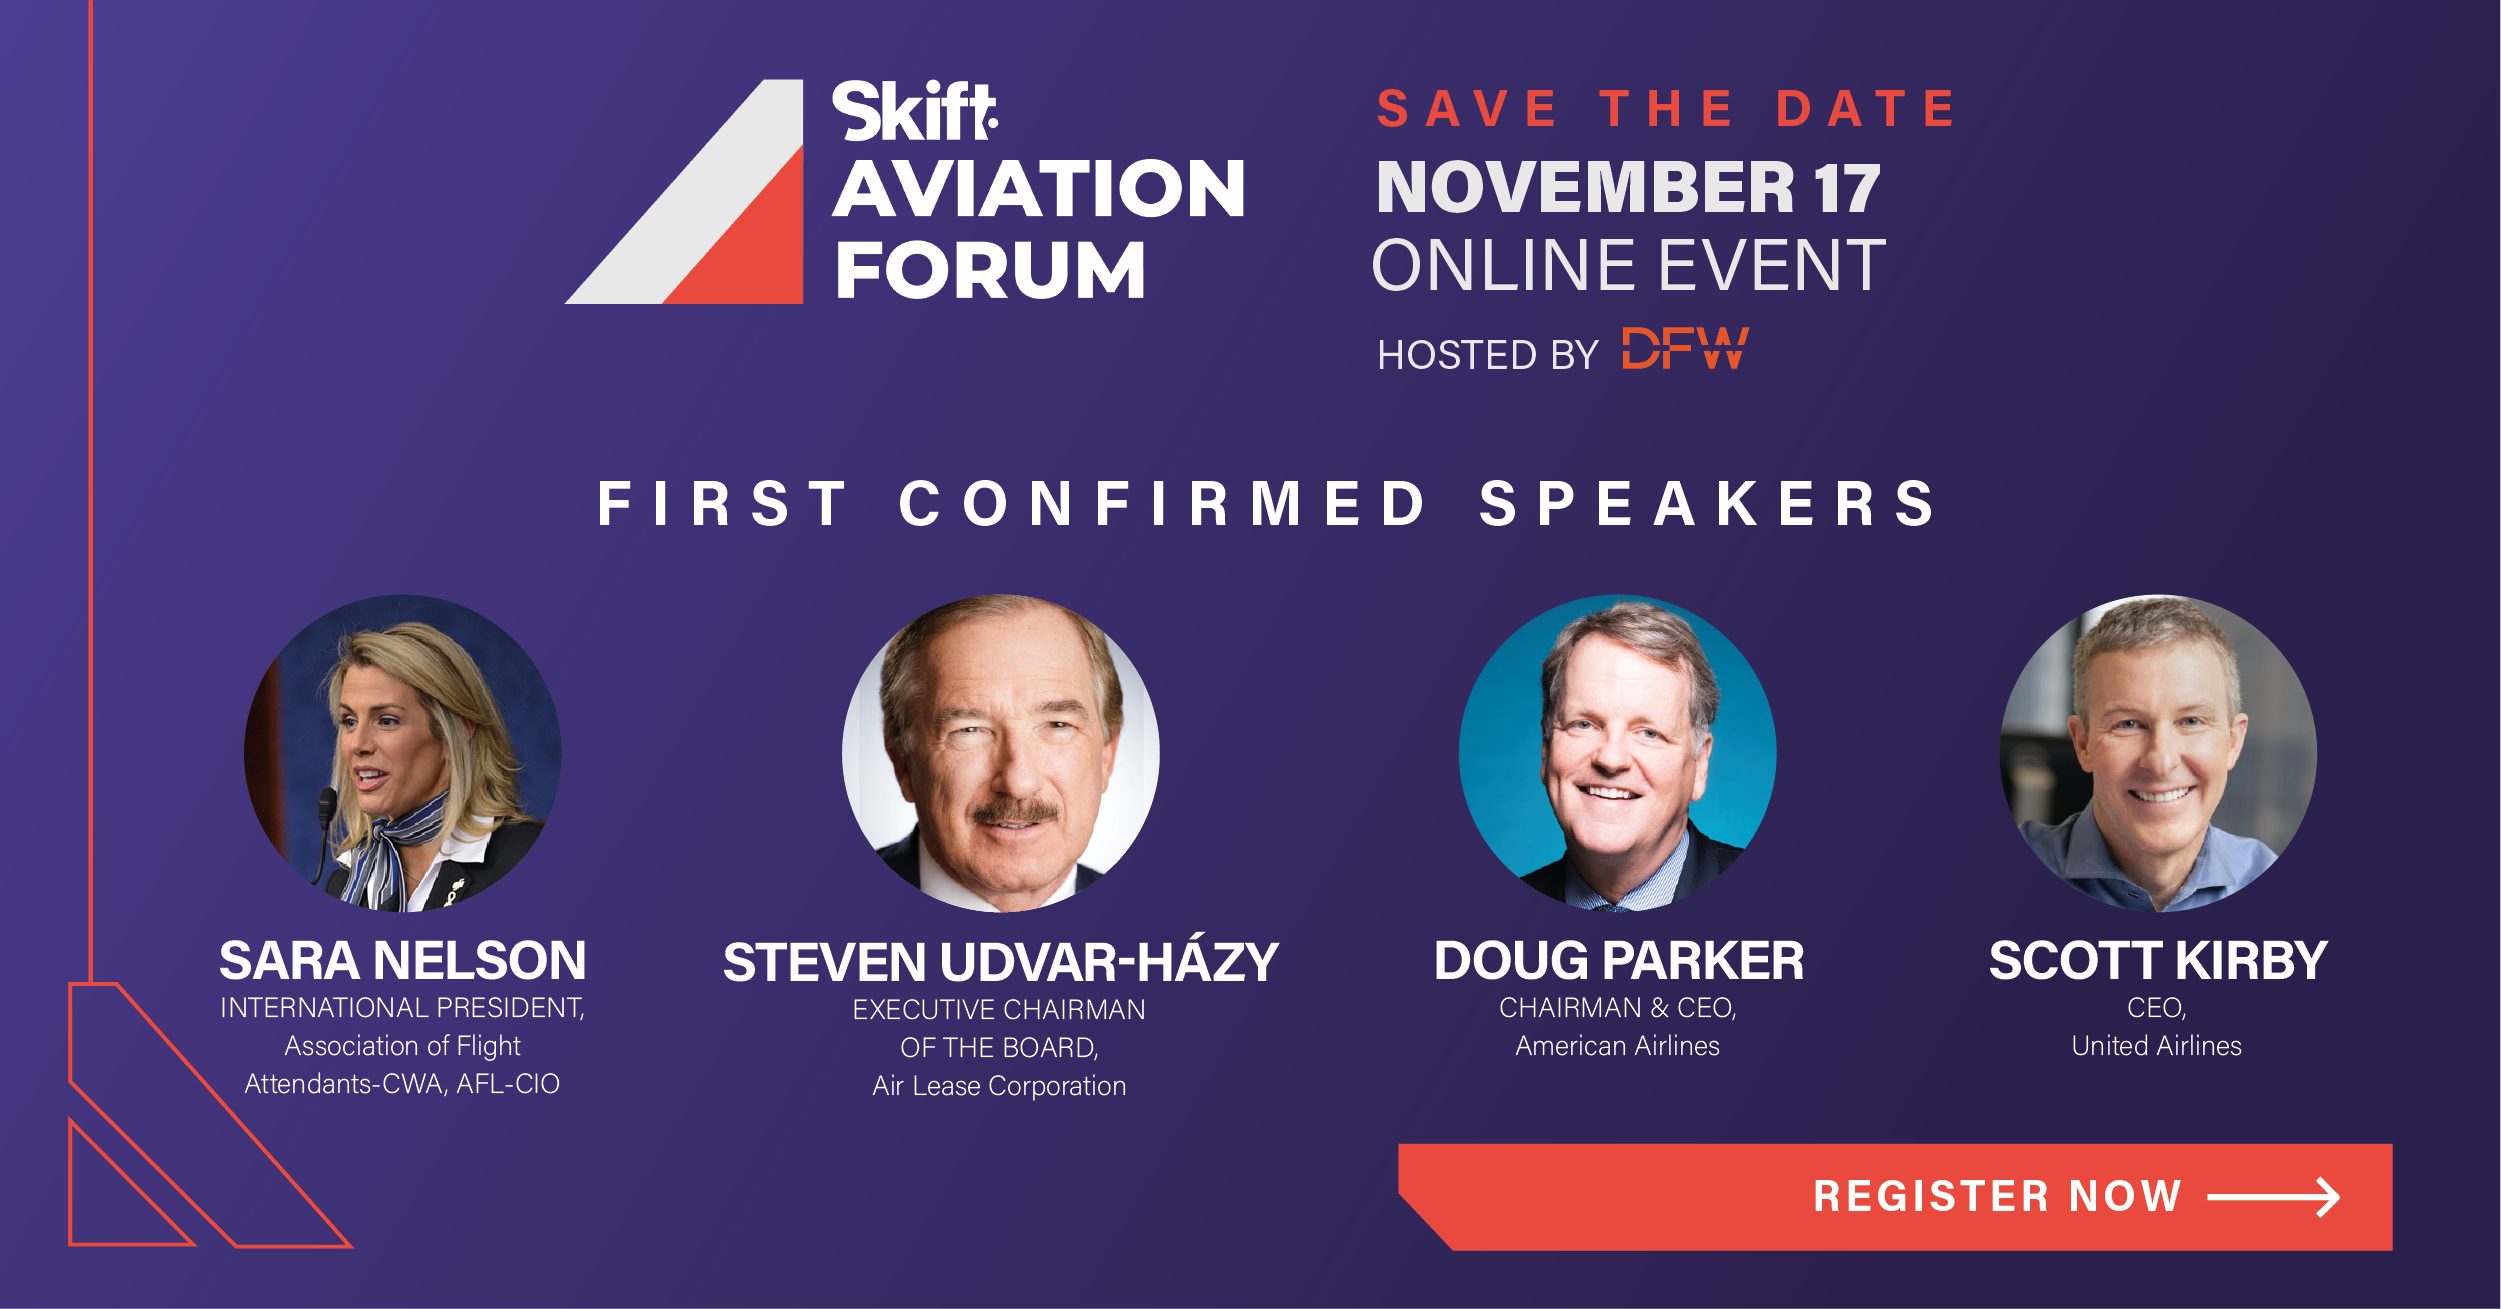 Skift Aviation Forum 2021 Skift Live Events